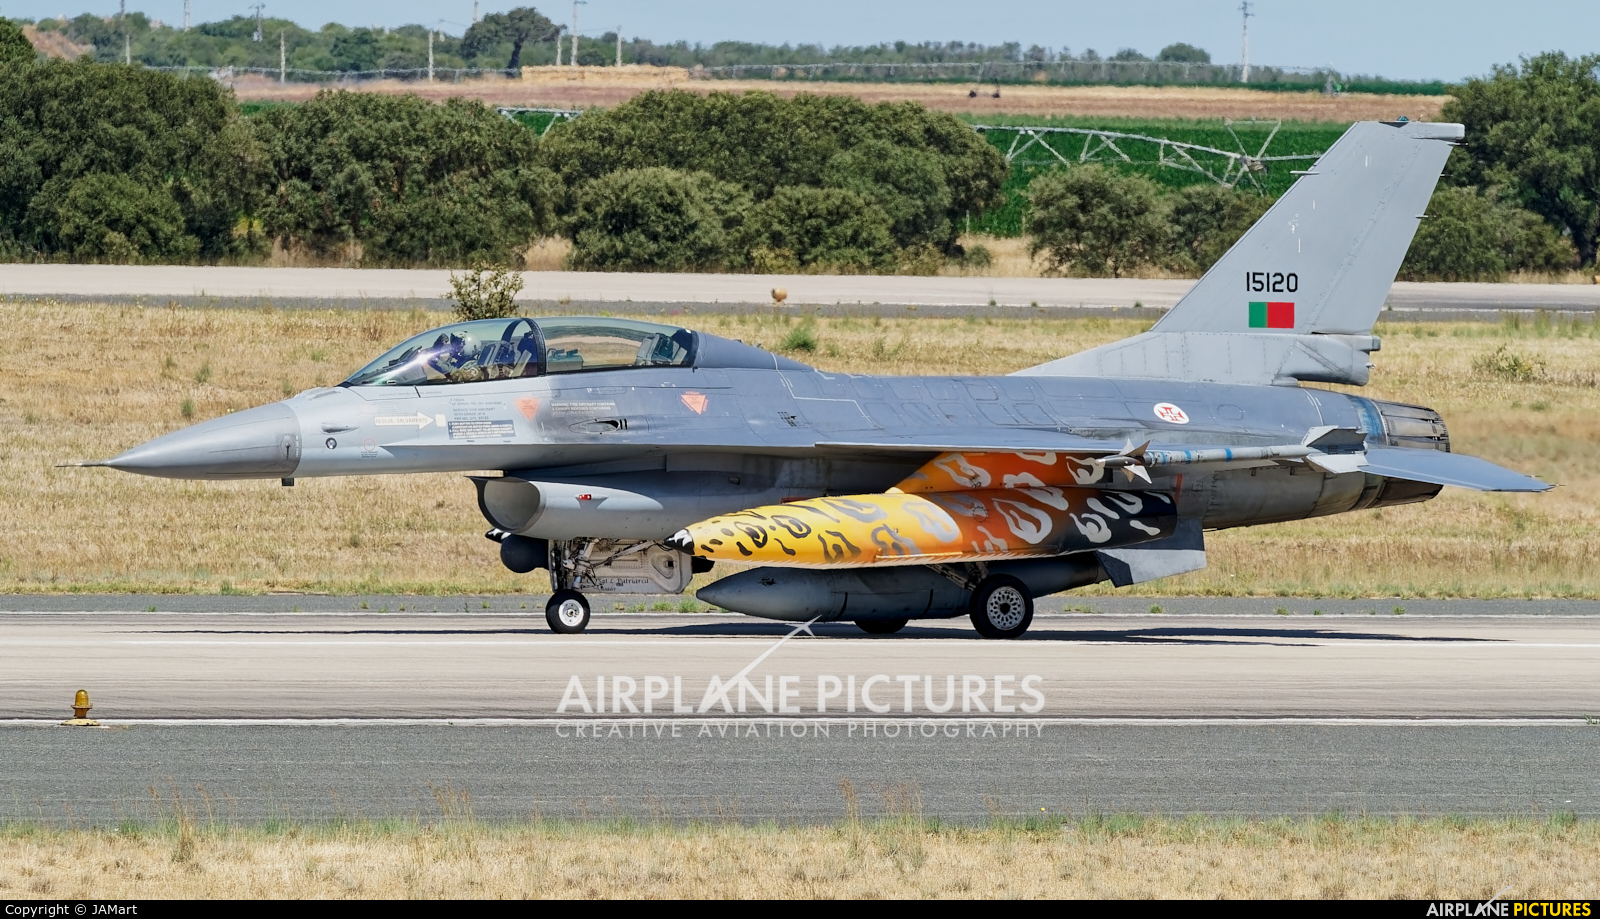 Portugal - Air Force 15120 aircraft at Beja AB